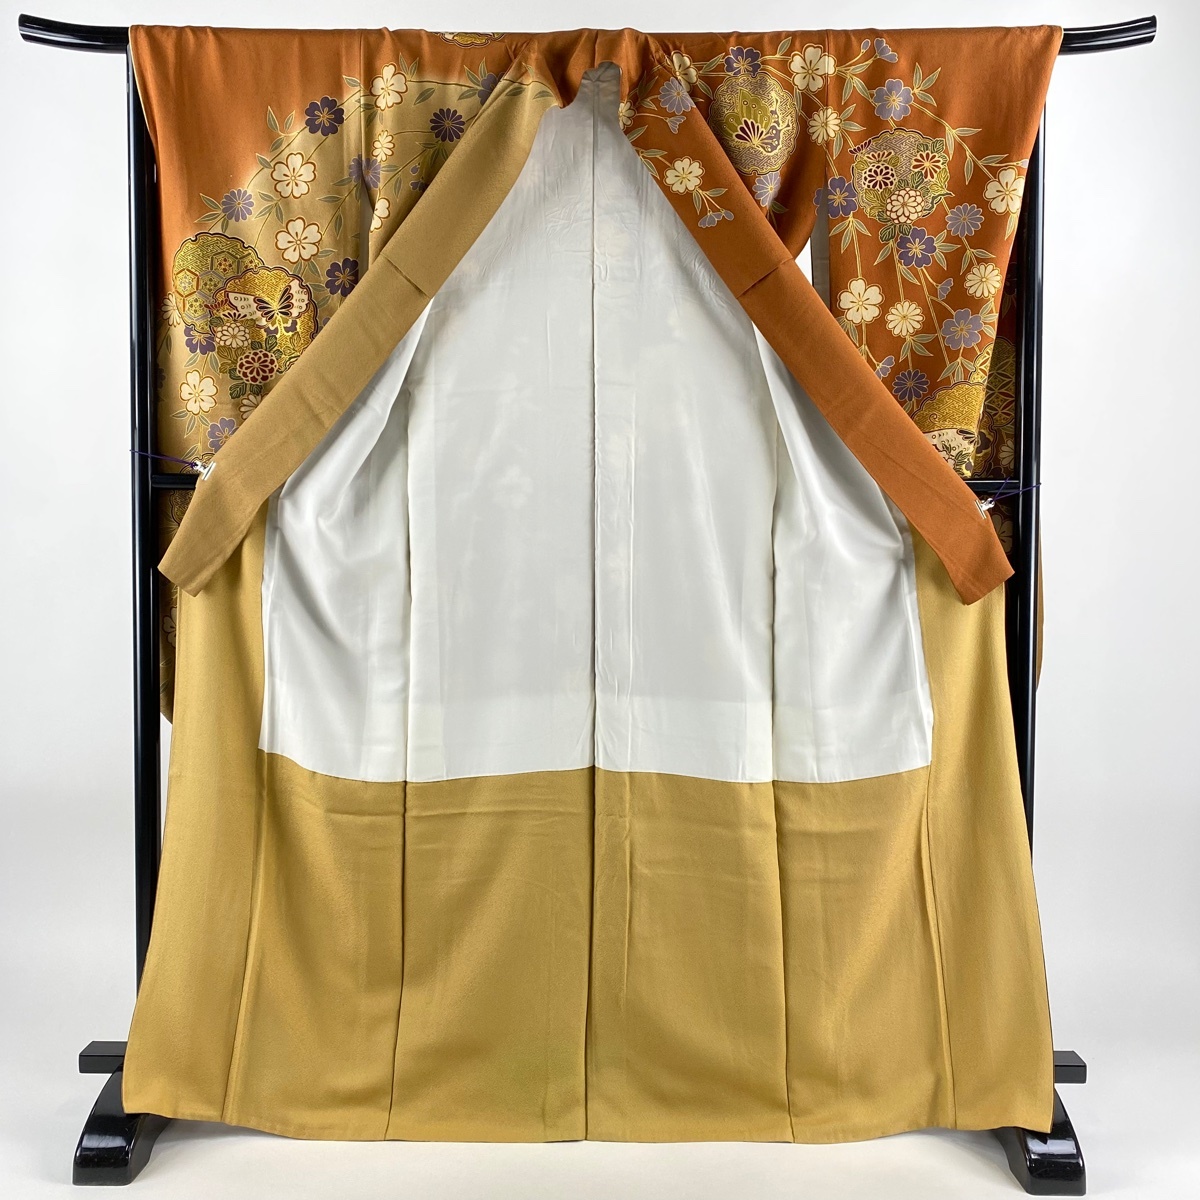  long-sleeved kimono length 167.5cm sleeve length 67.5cm L. snow wheel butterfly gold thread gold paint red tea silk preeminence goods [ used ]